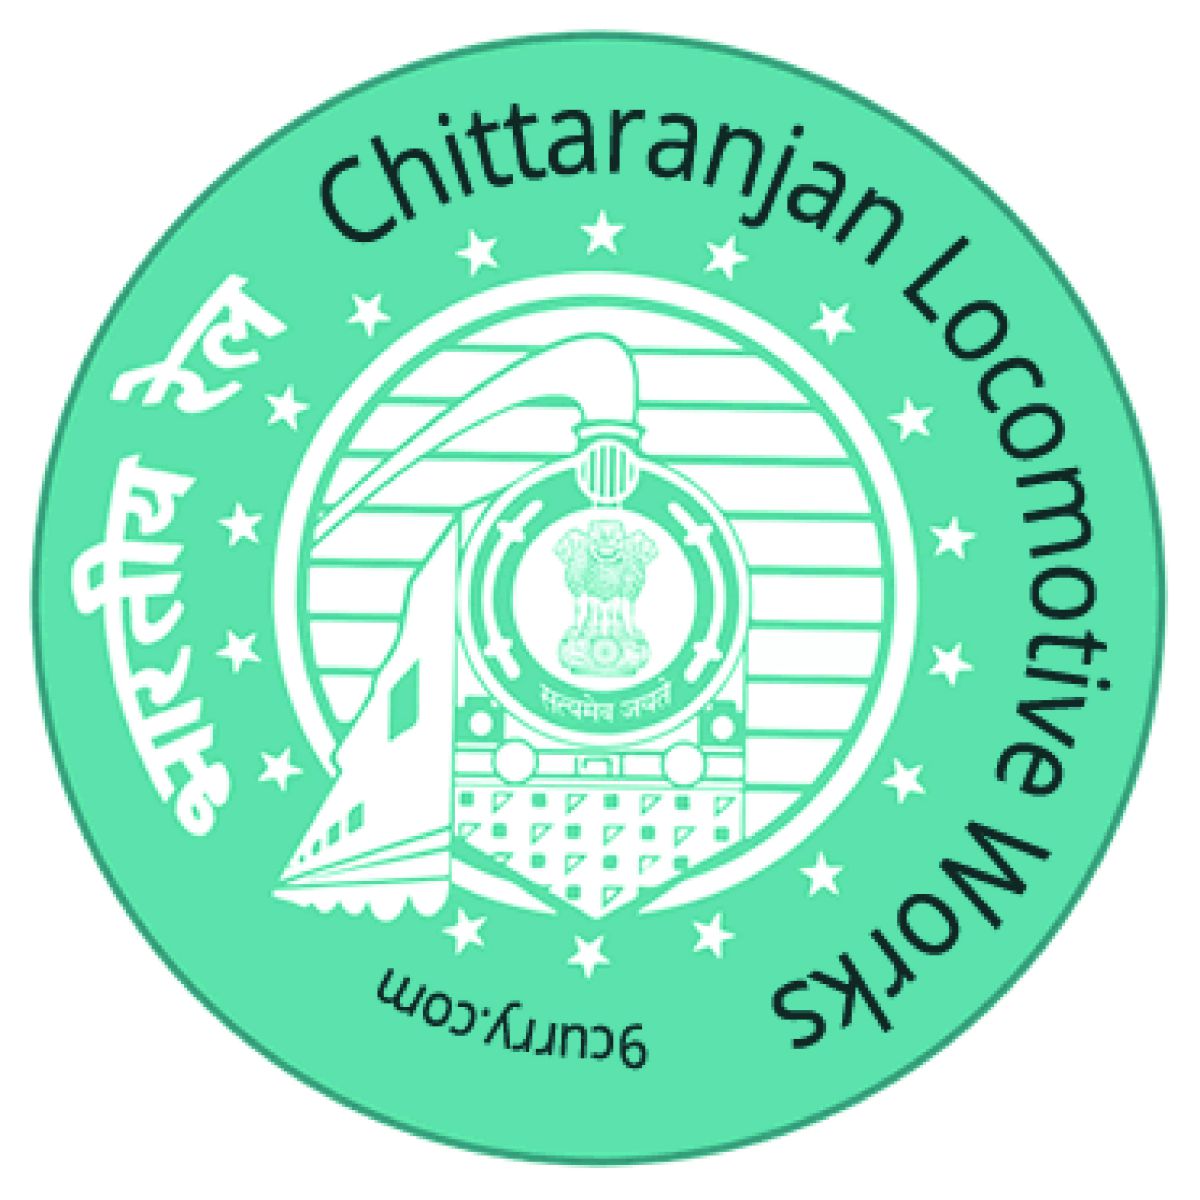 Chittaranjan-compressed